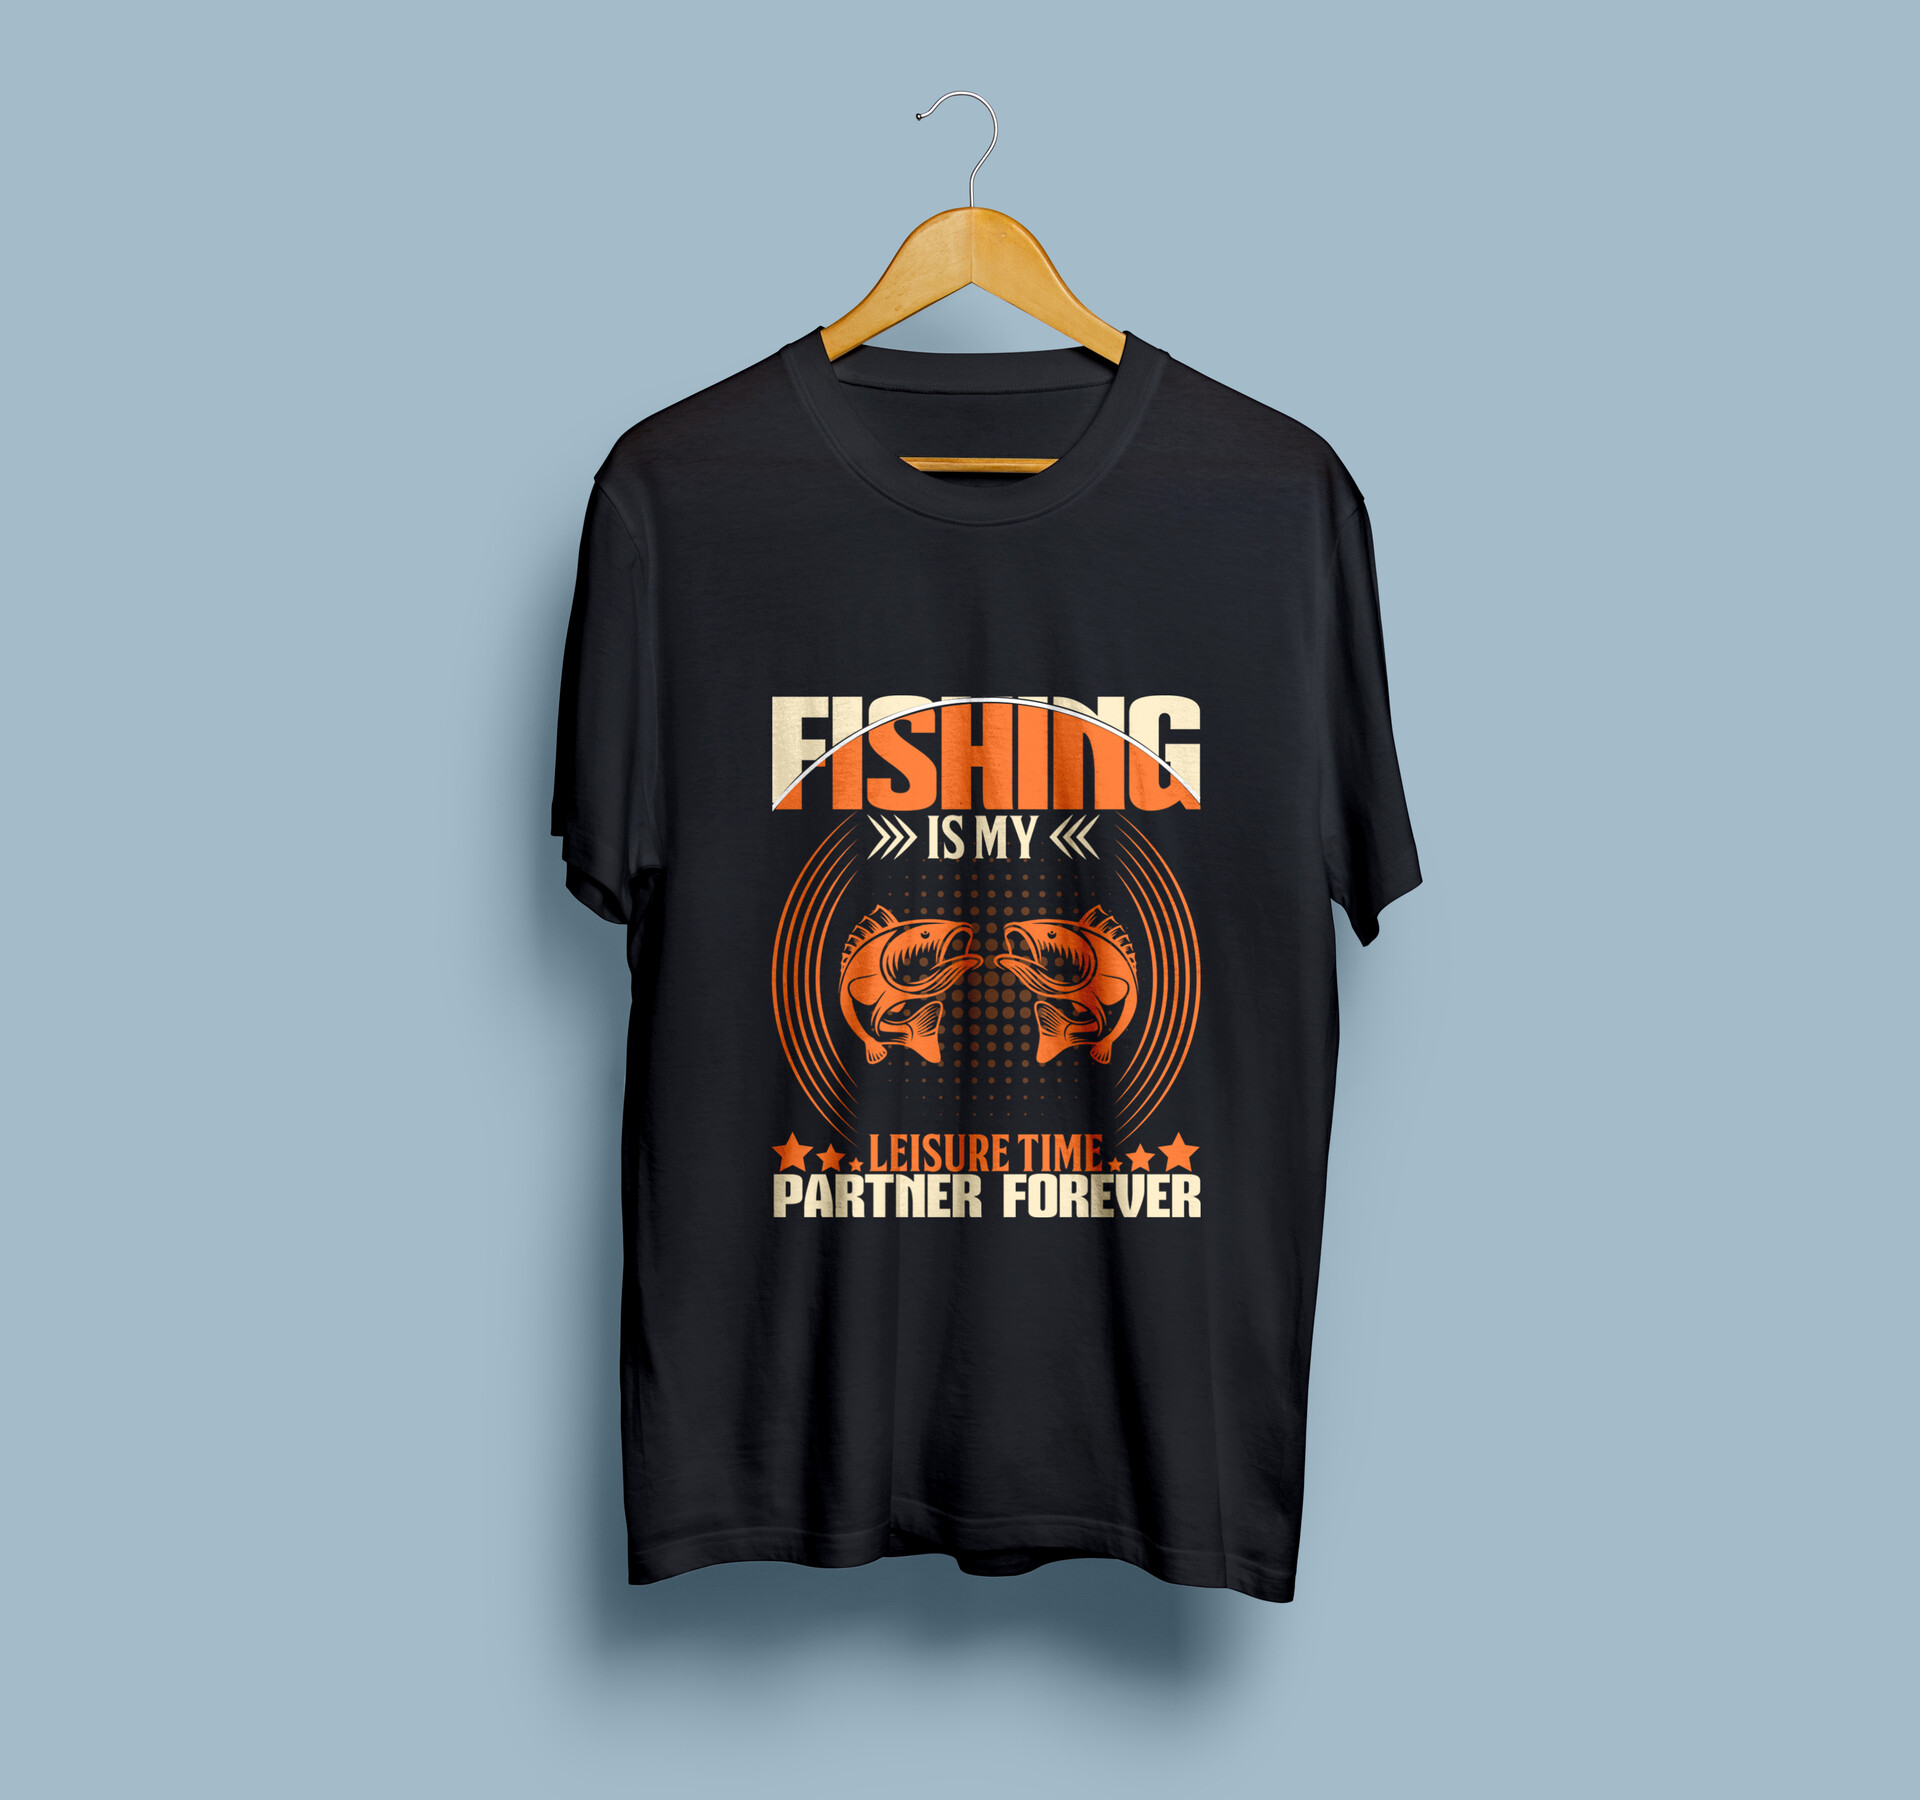 ArtStation - Fishing is my leisure time- Custom Tshirt Design